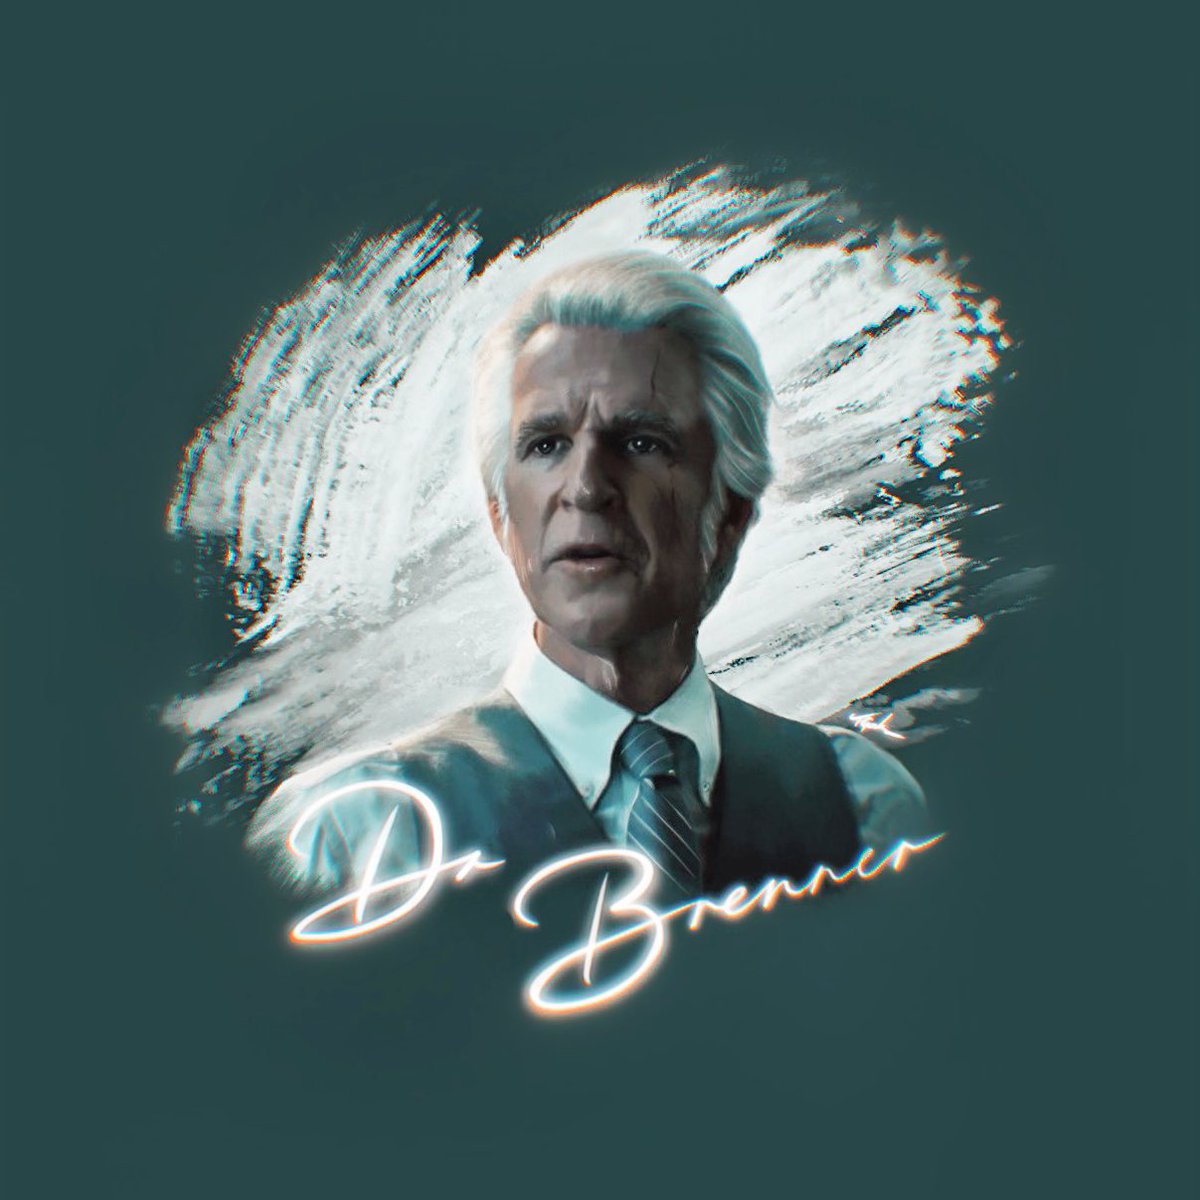 Digital painting of Dr Brenner ✍🏻✨
from Season 4, hopefully we’ll see more of him in Season 5? 🙏🏻😱

@strangerwriters #DrBrenner
@Stranger_Things #Fanart #Papa
@MatthewModine